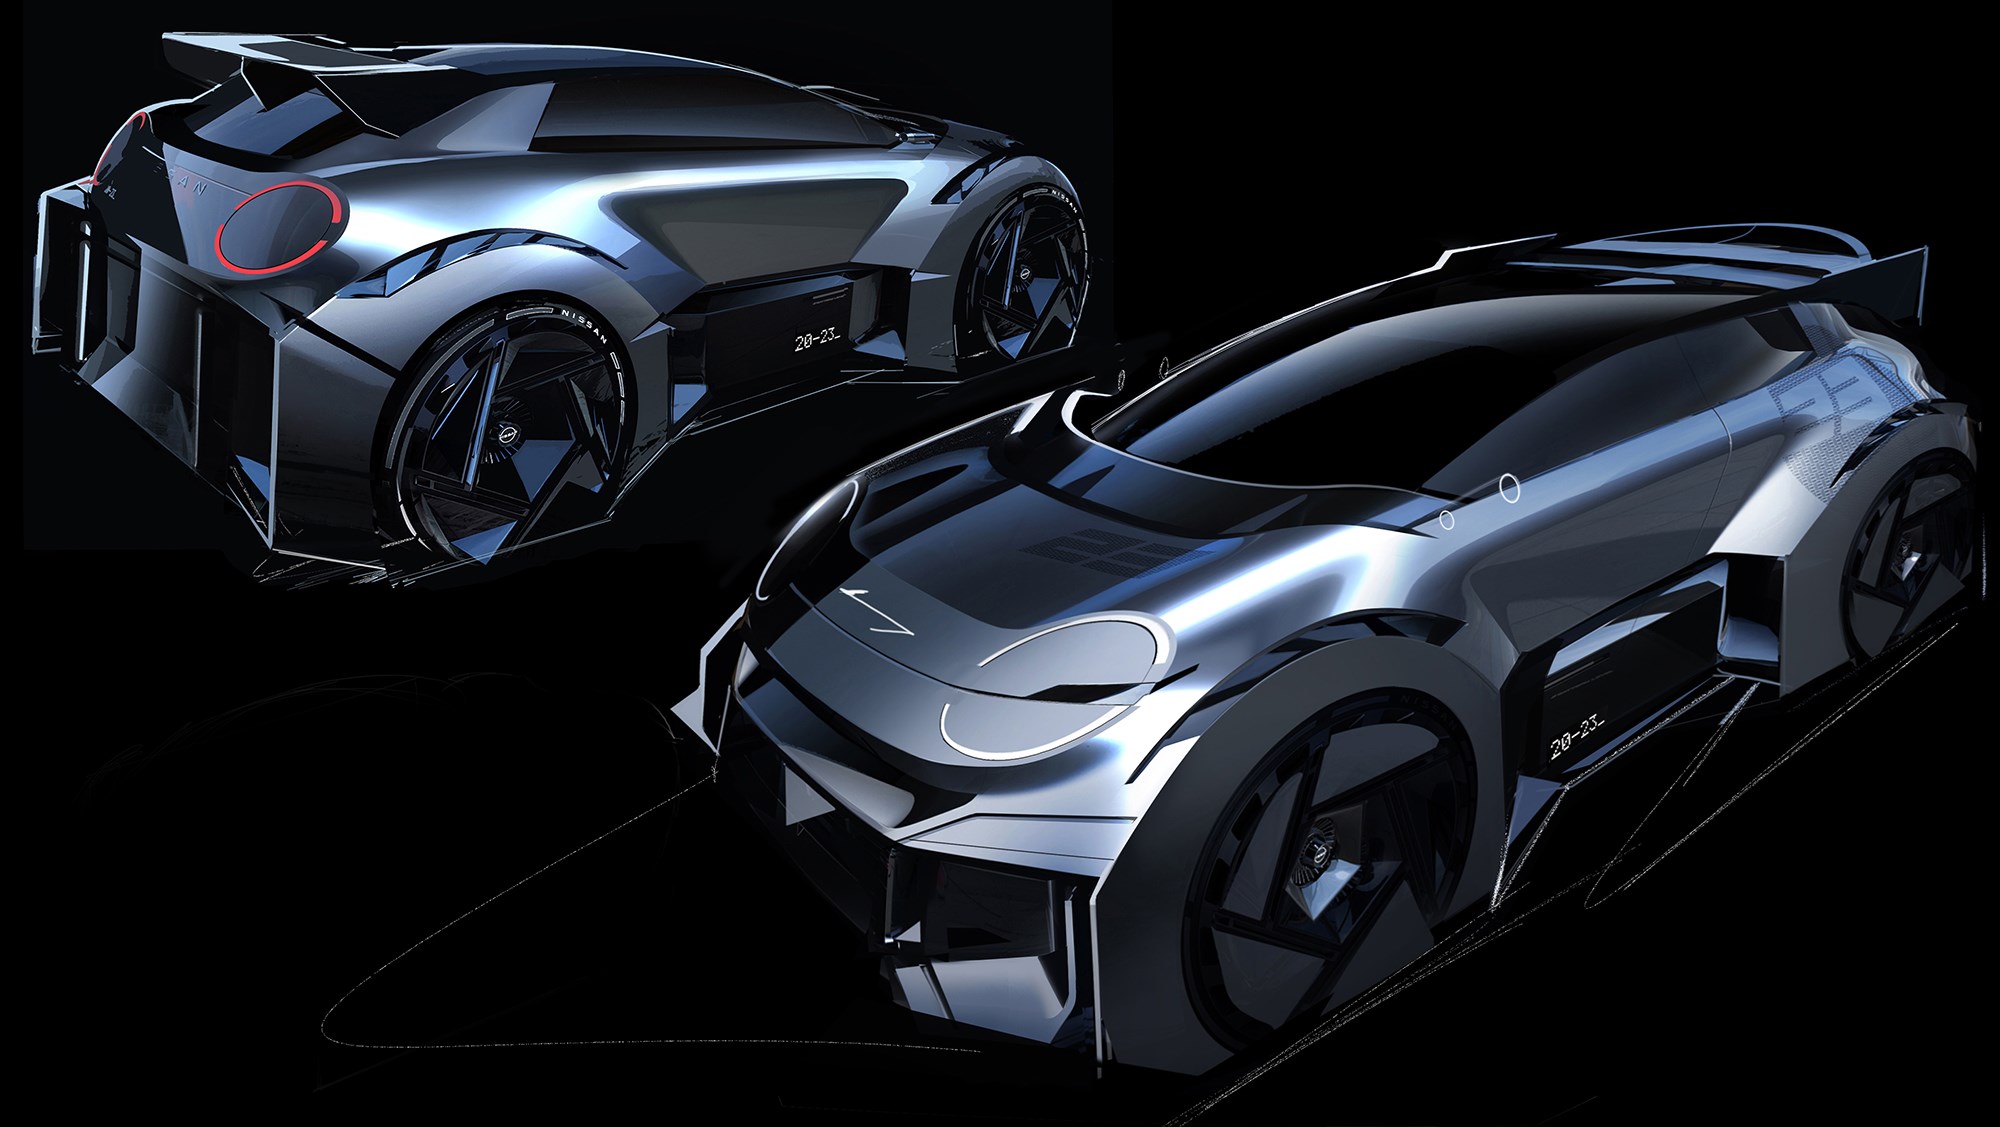 Hot urban EV concept previews all-new Nissan Micra